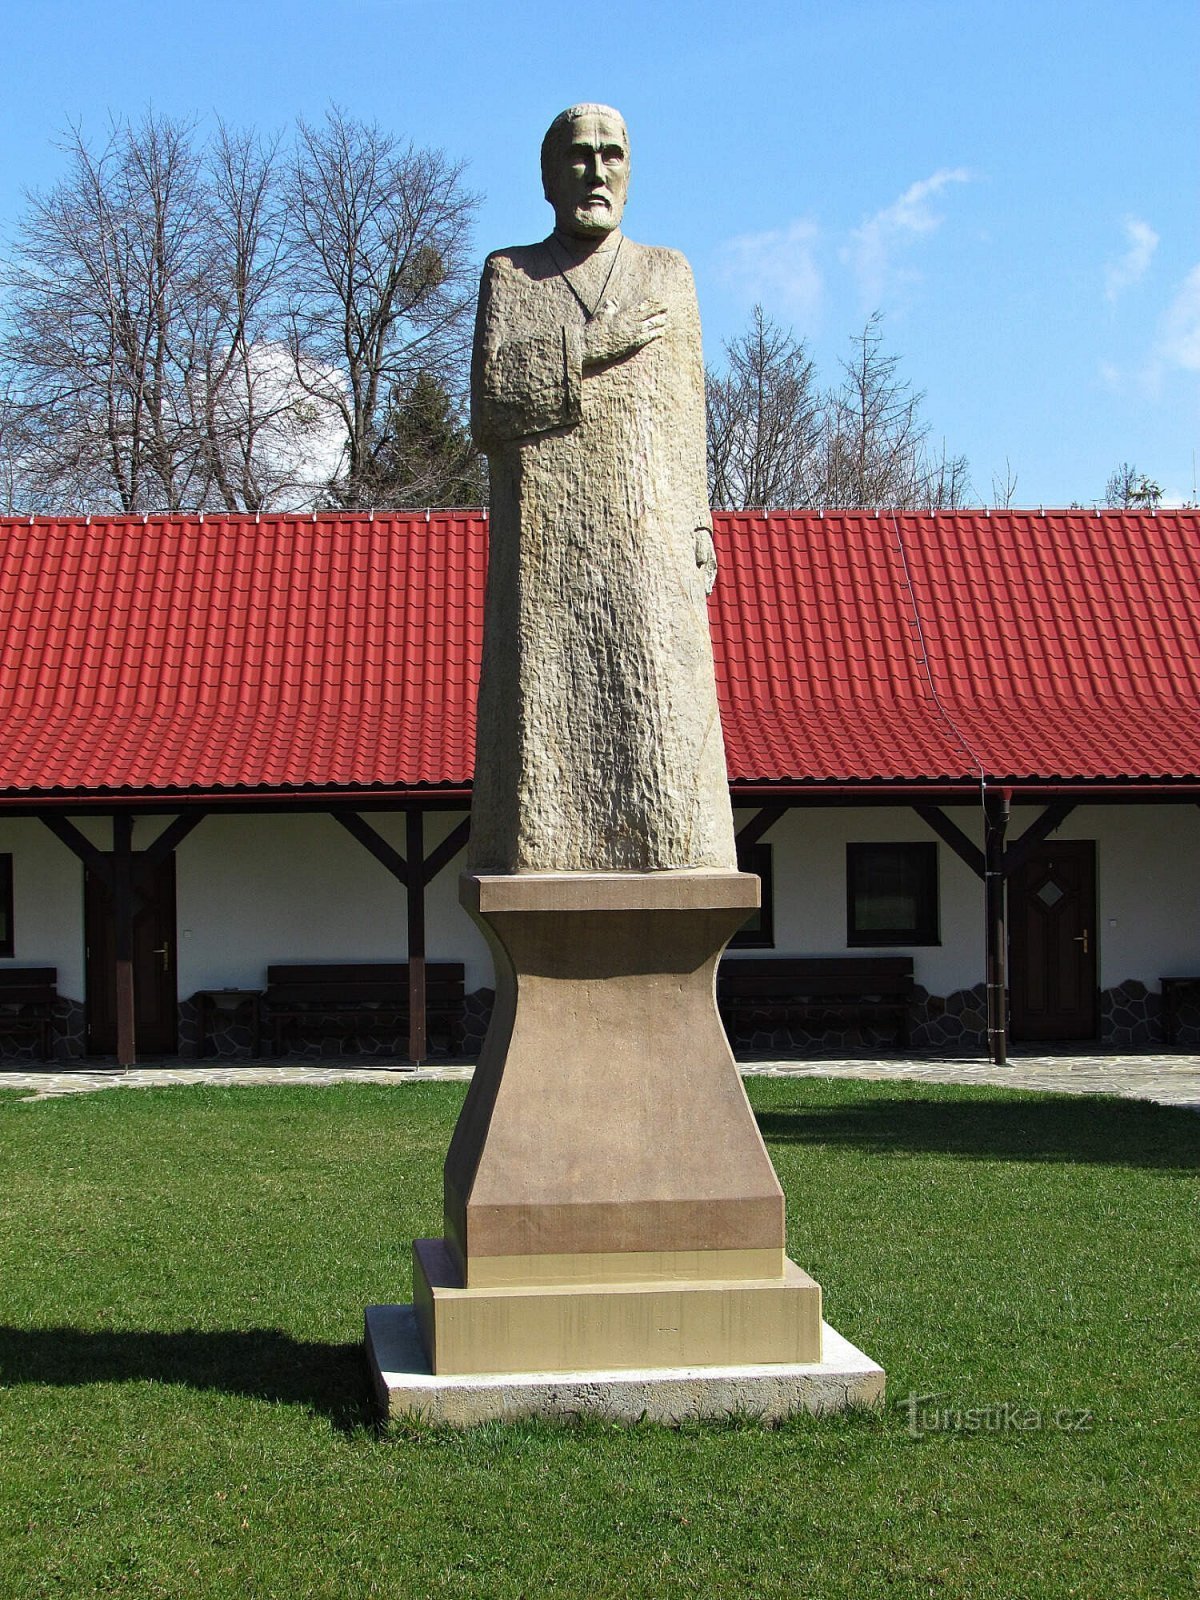 Prženské Paseky - una estatua de Hus y un pedestal sin estatua